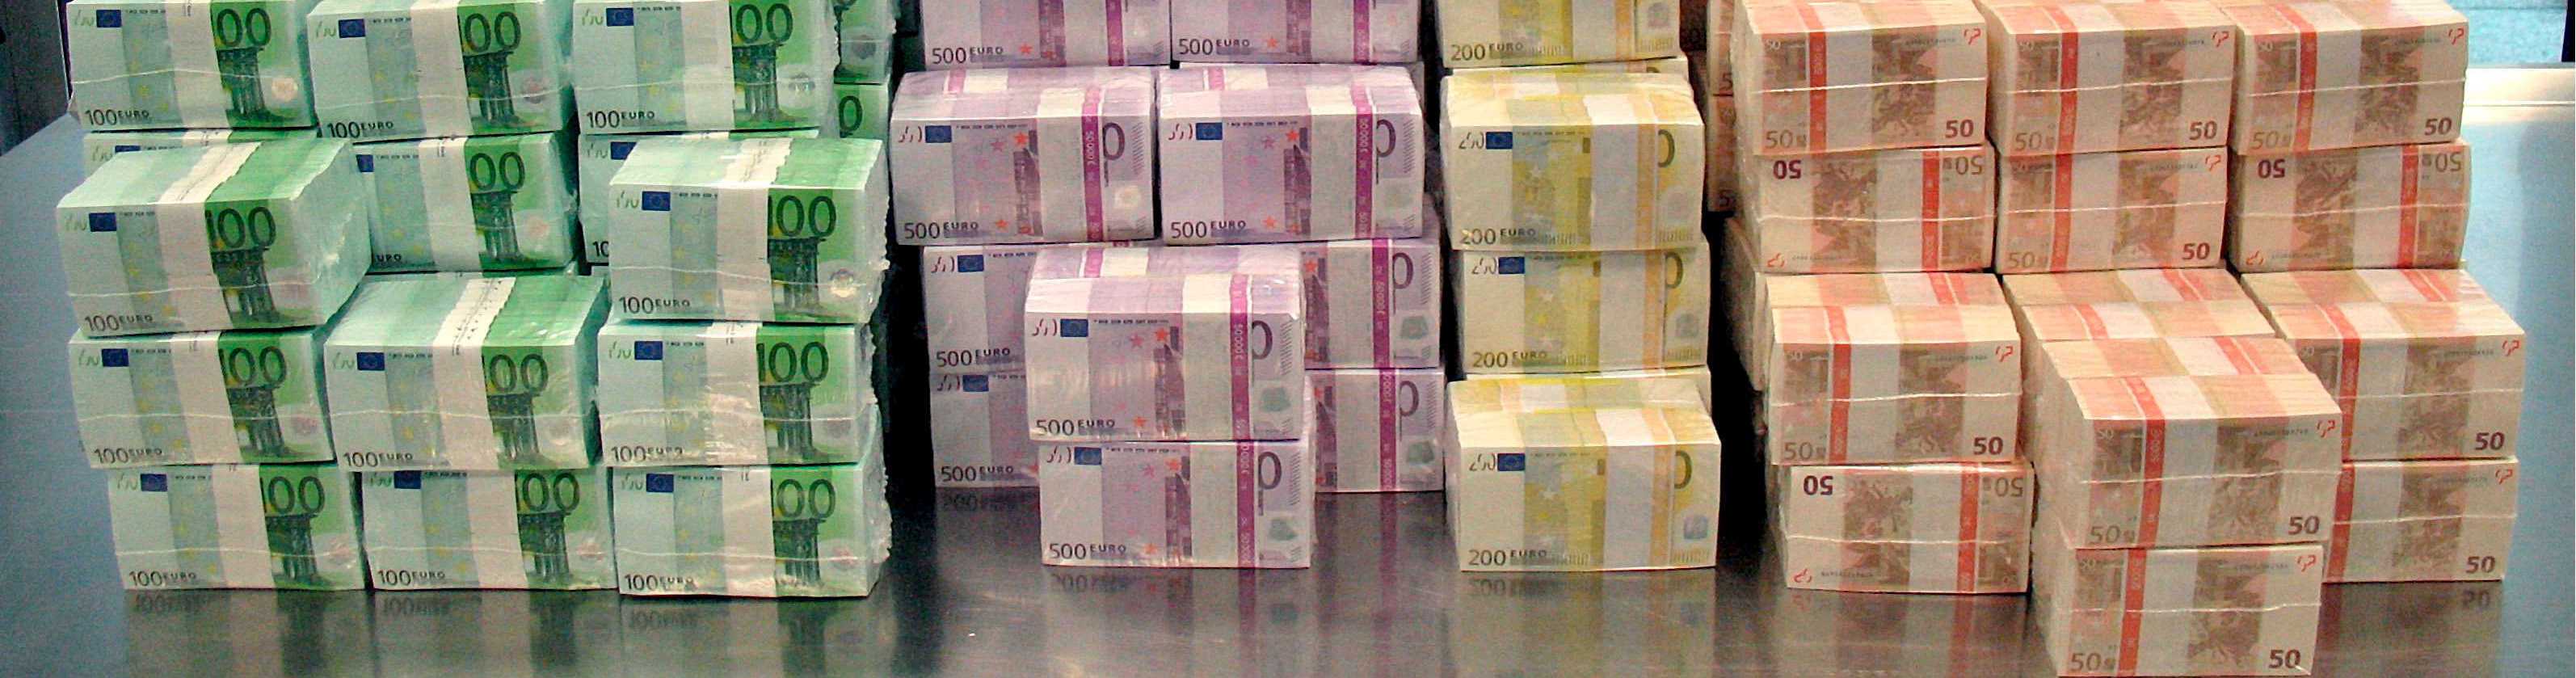 Евро много пачек